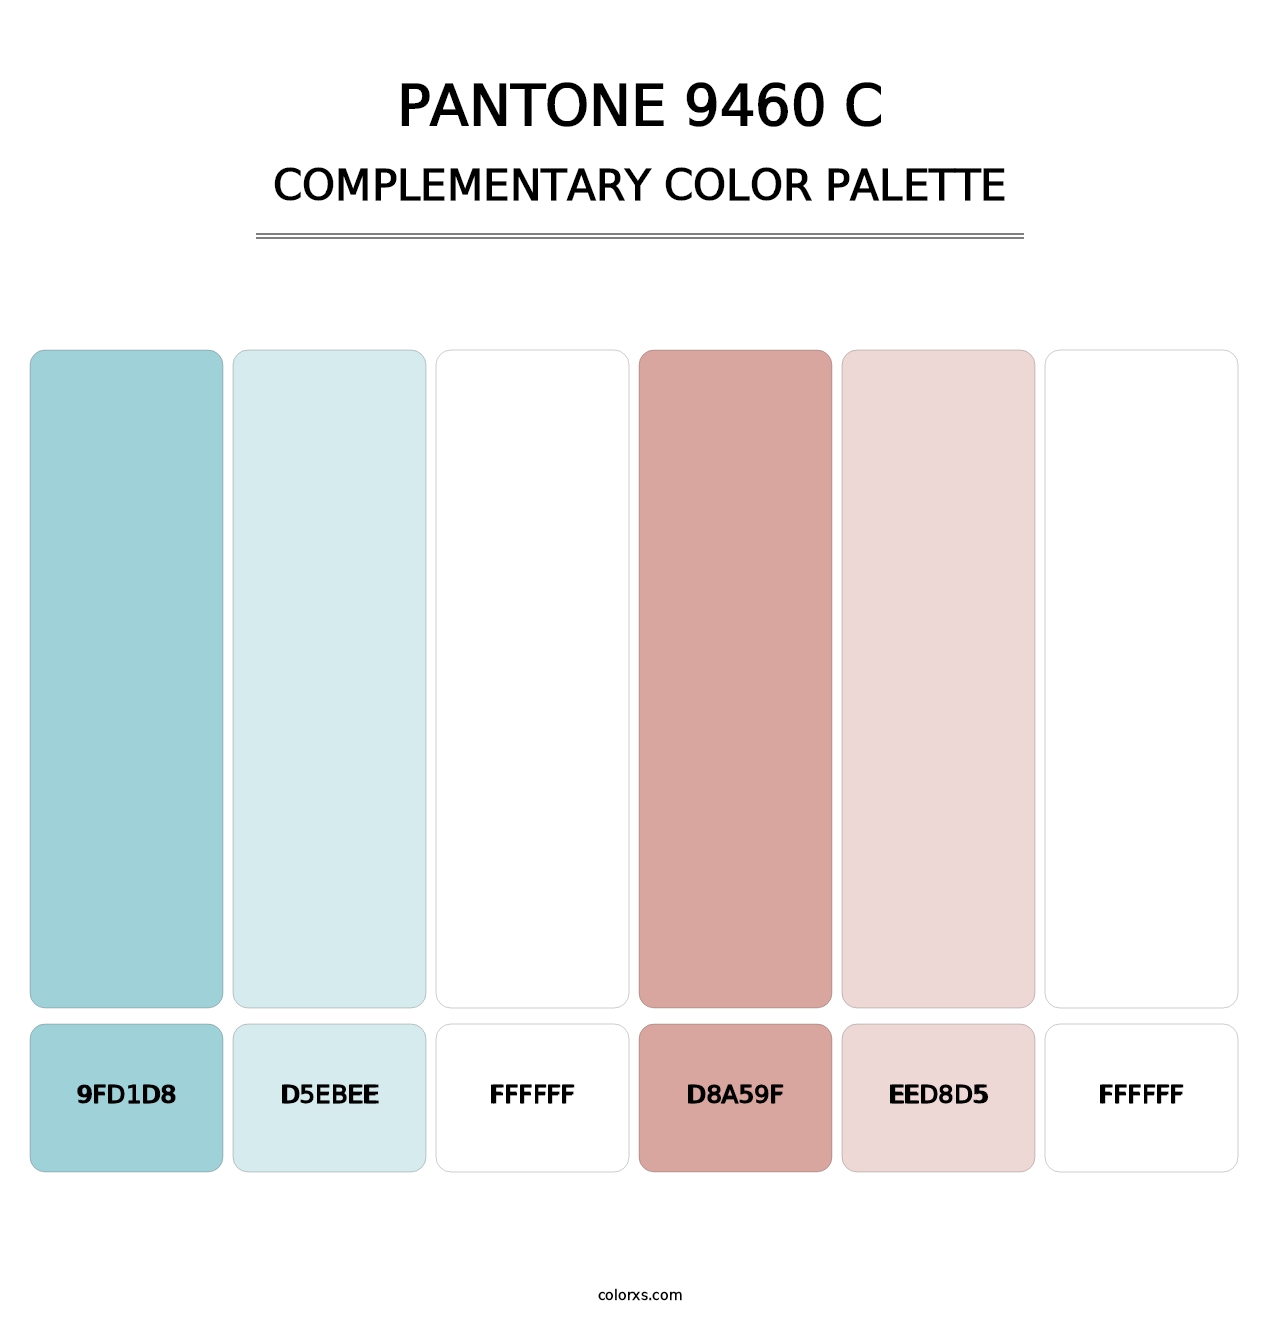 PANTONE 9460 C - Complementary Color Palette